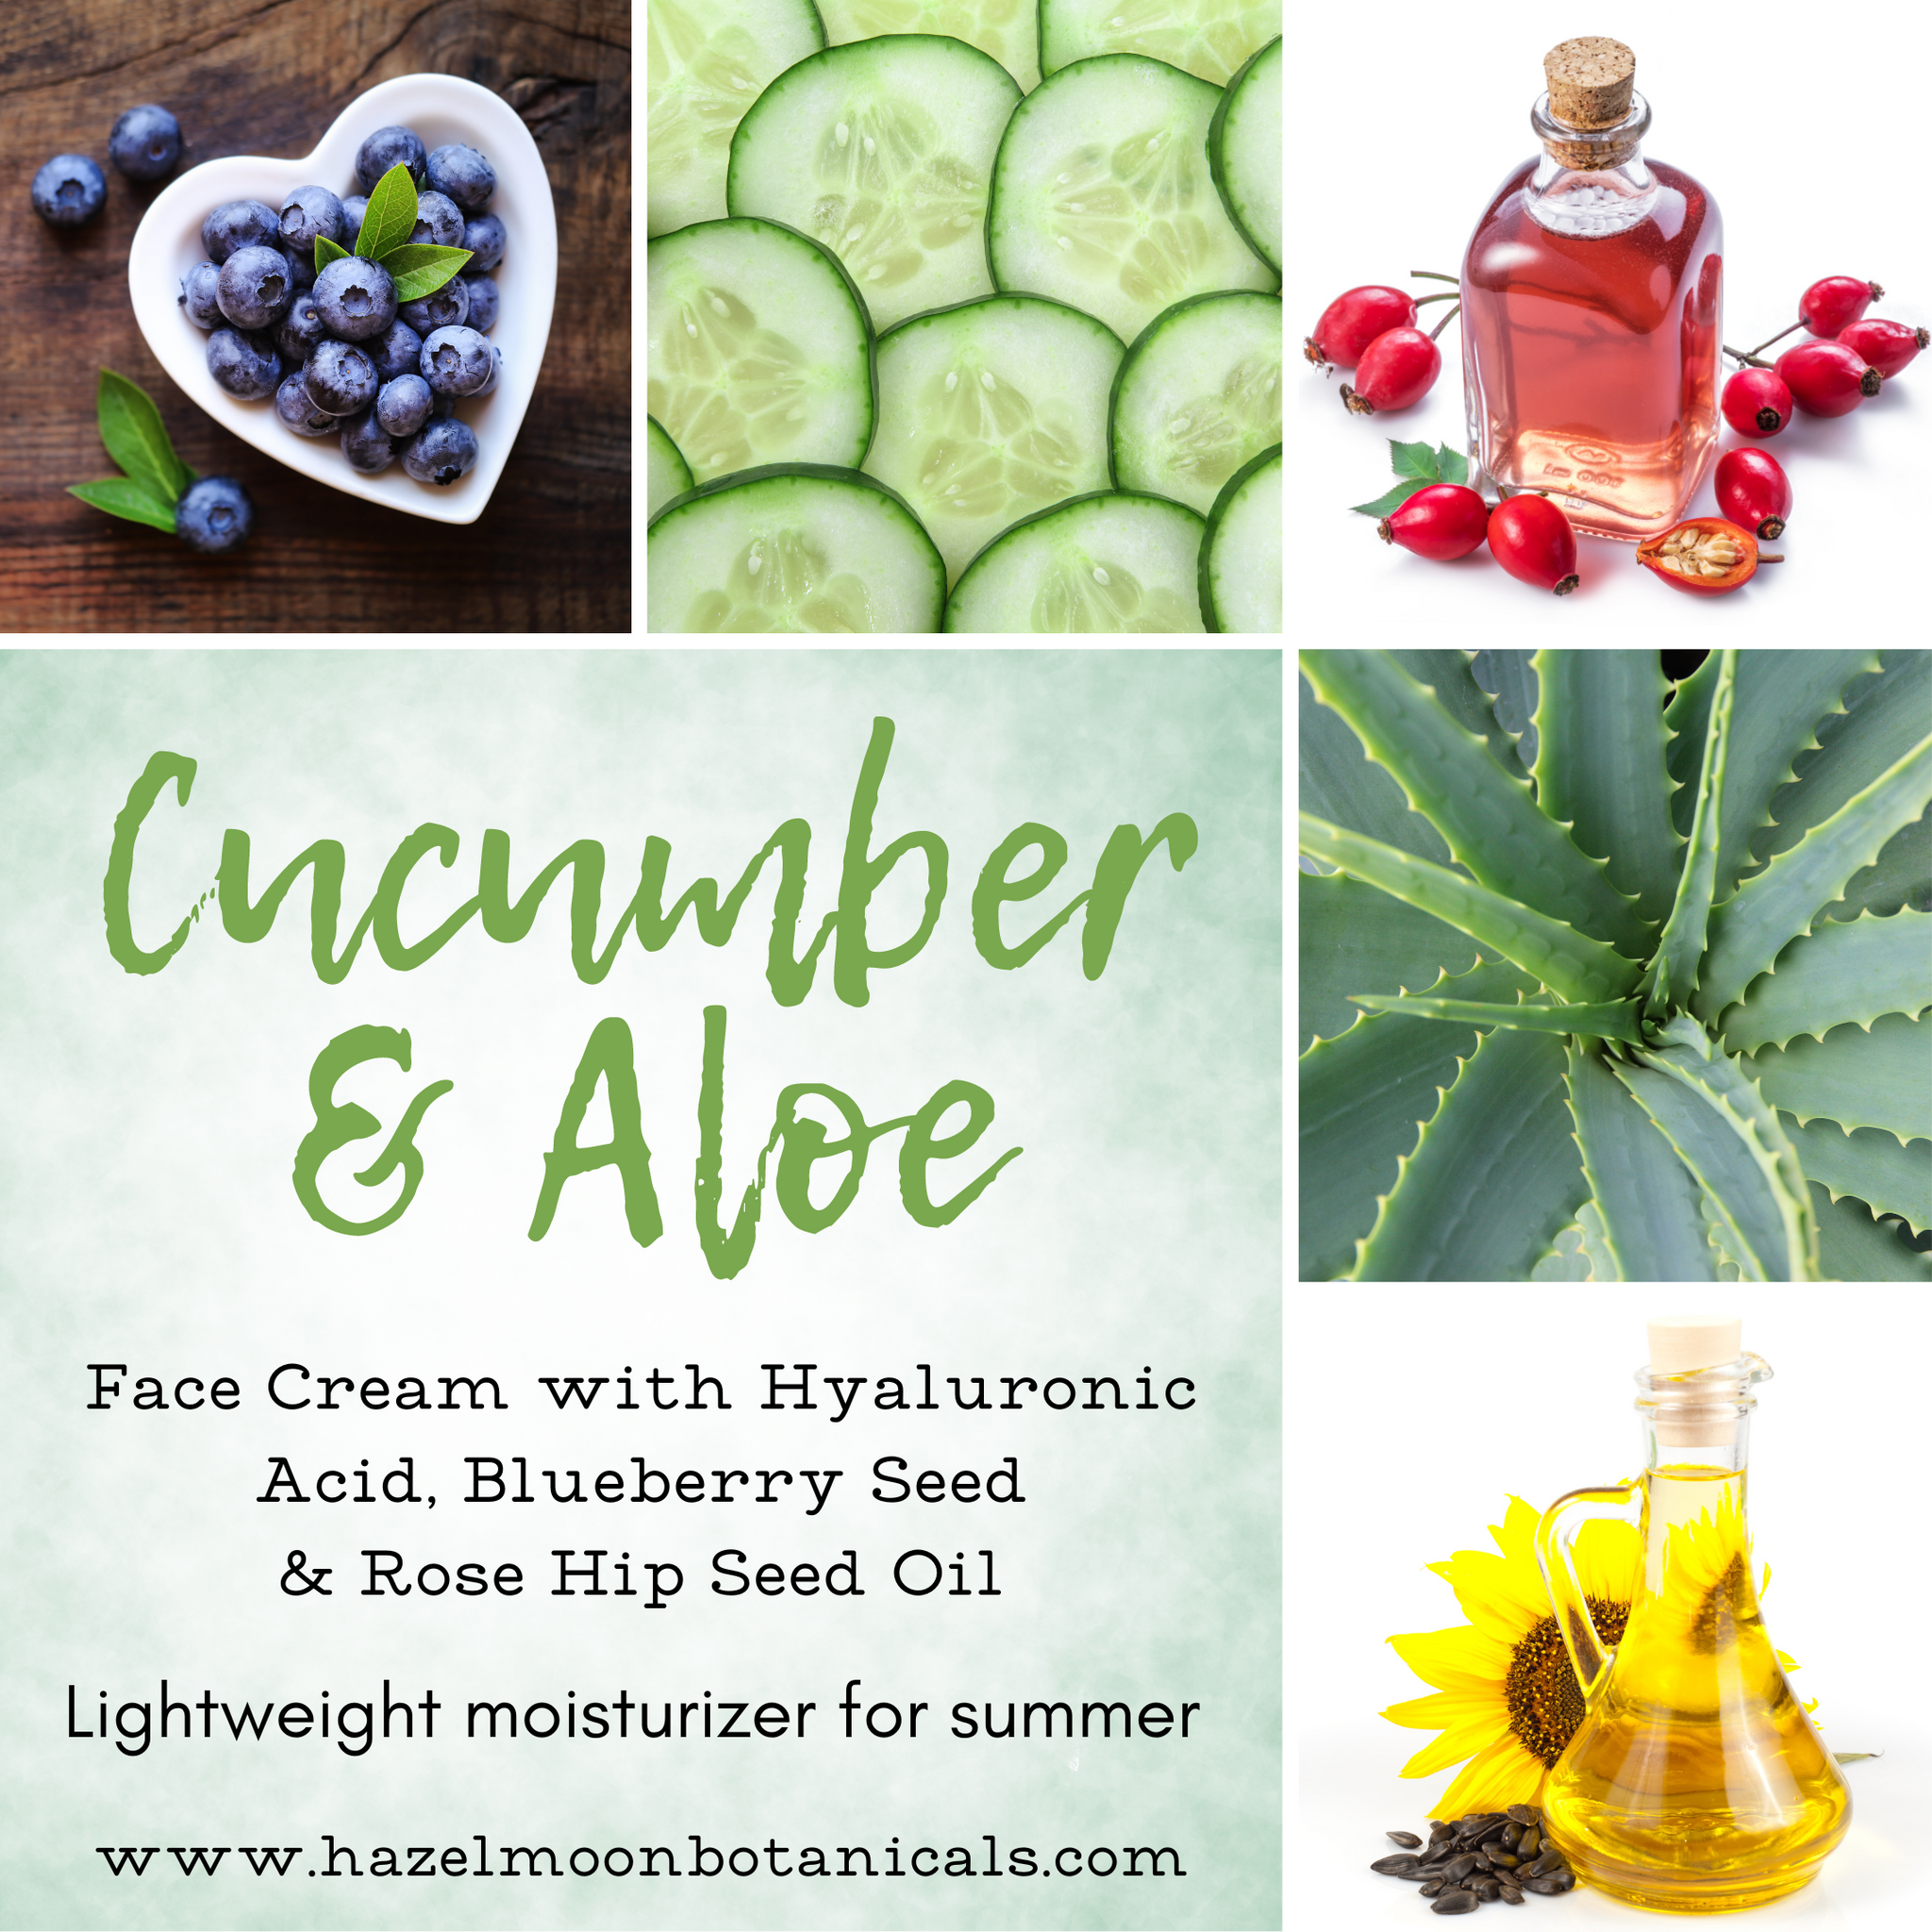 Cucumber & Aloe Face Cream